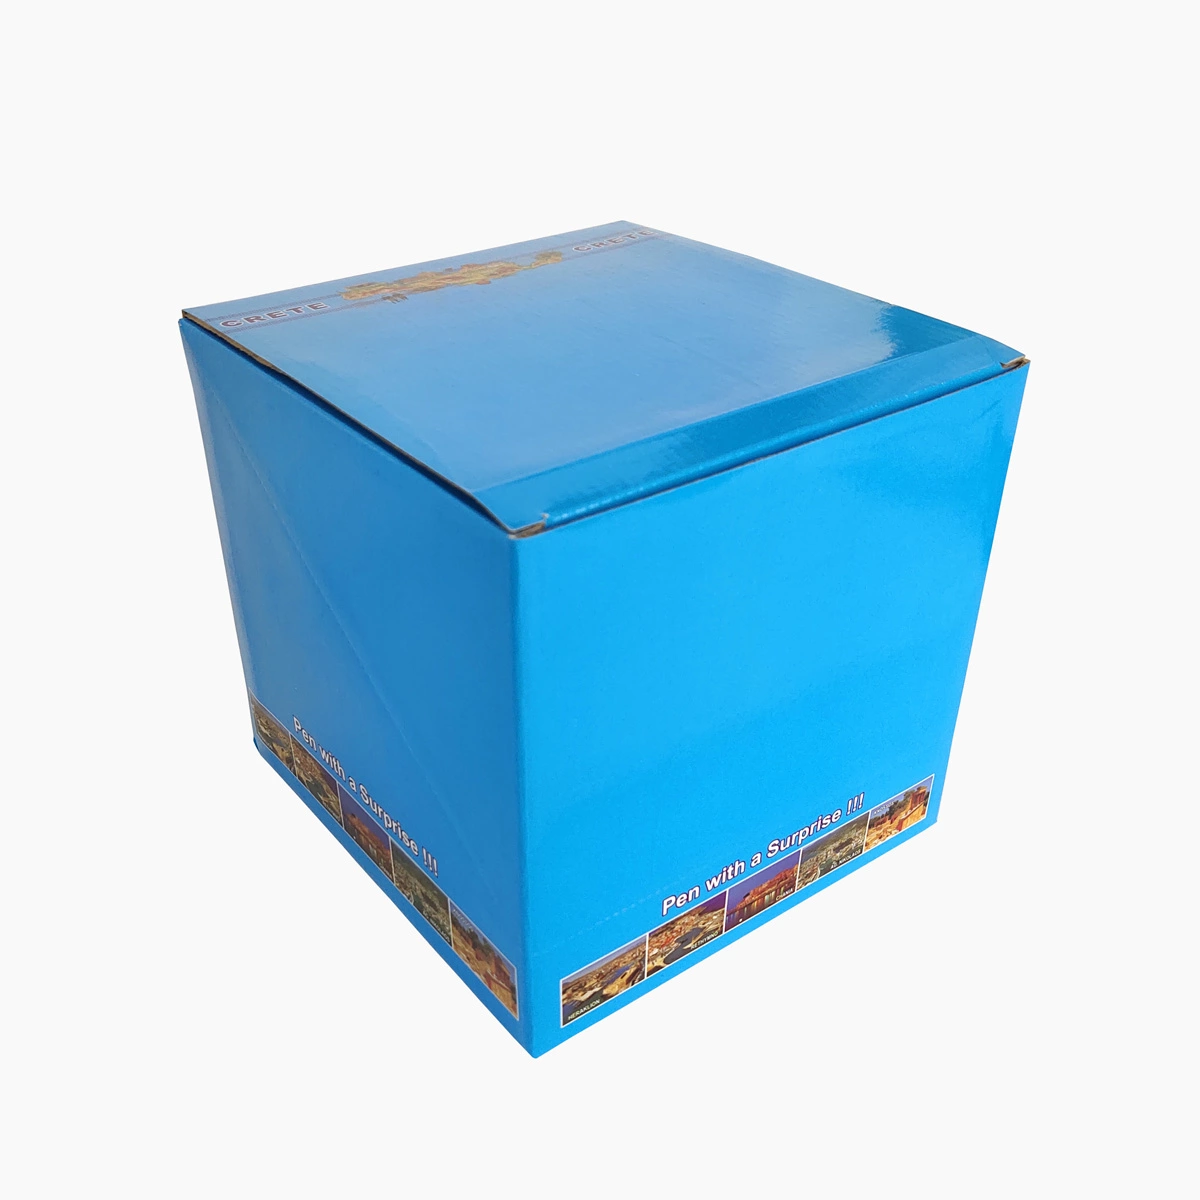 DB004 Pen Package Folding Color Box Corrugated Cardboard Display Box